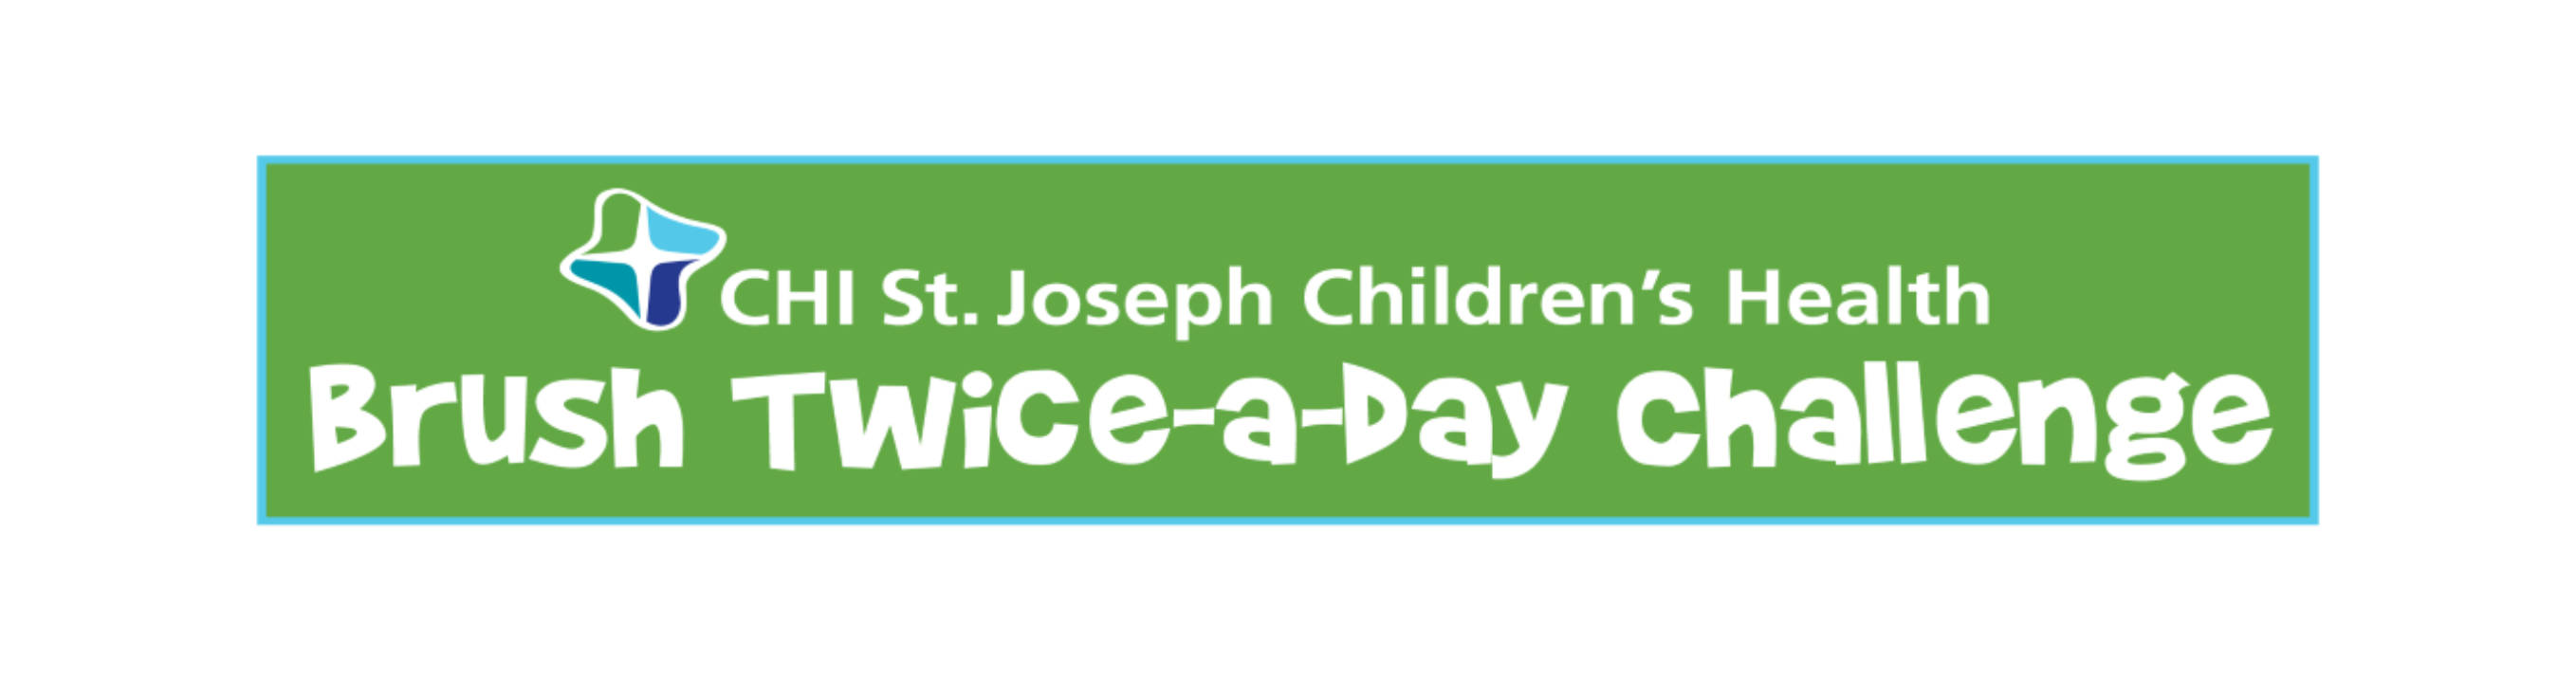 CHI St. Joseph Children's Health Brush /twice-a-Day Challenge